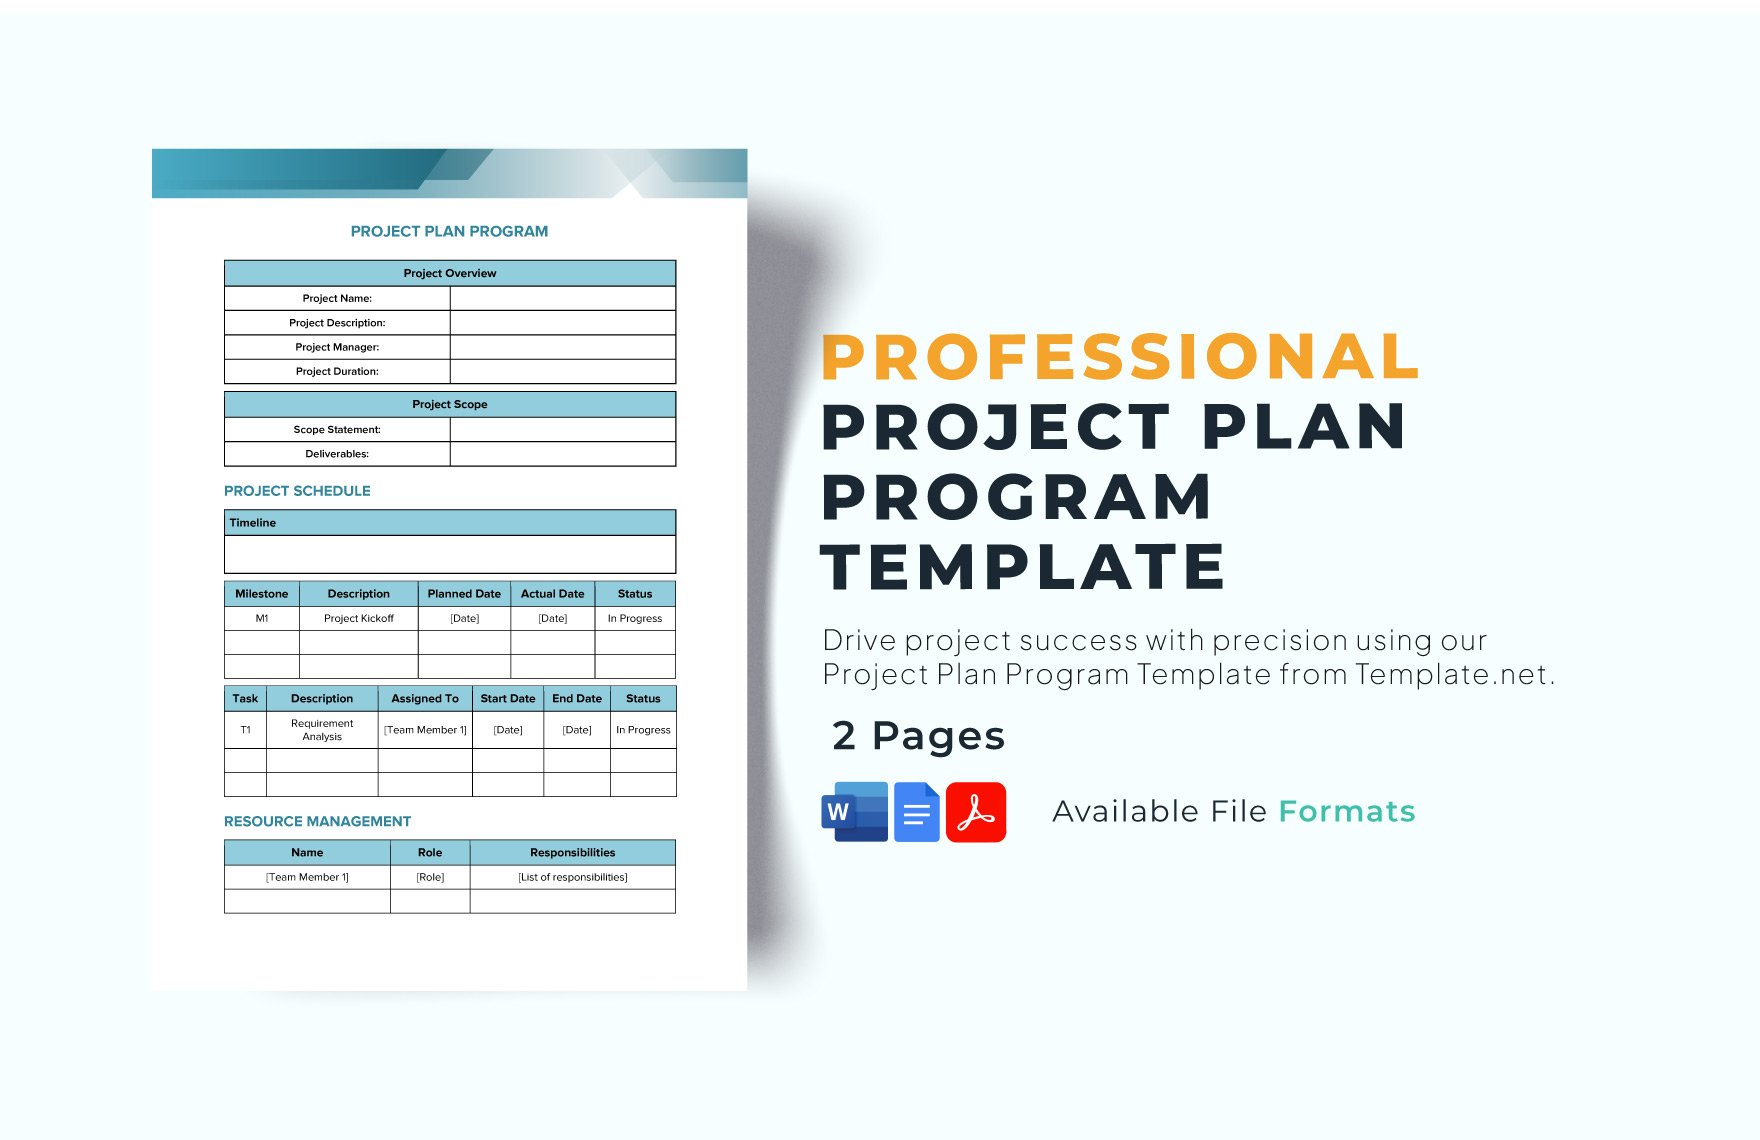 Project Plan Program Template